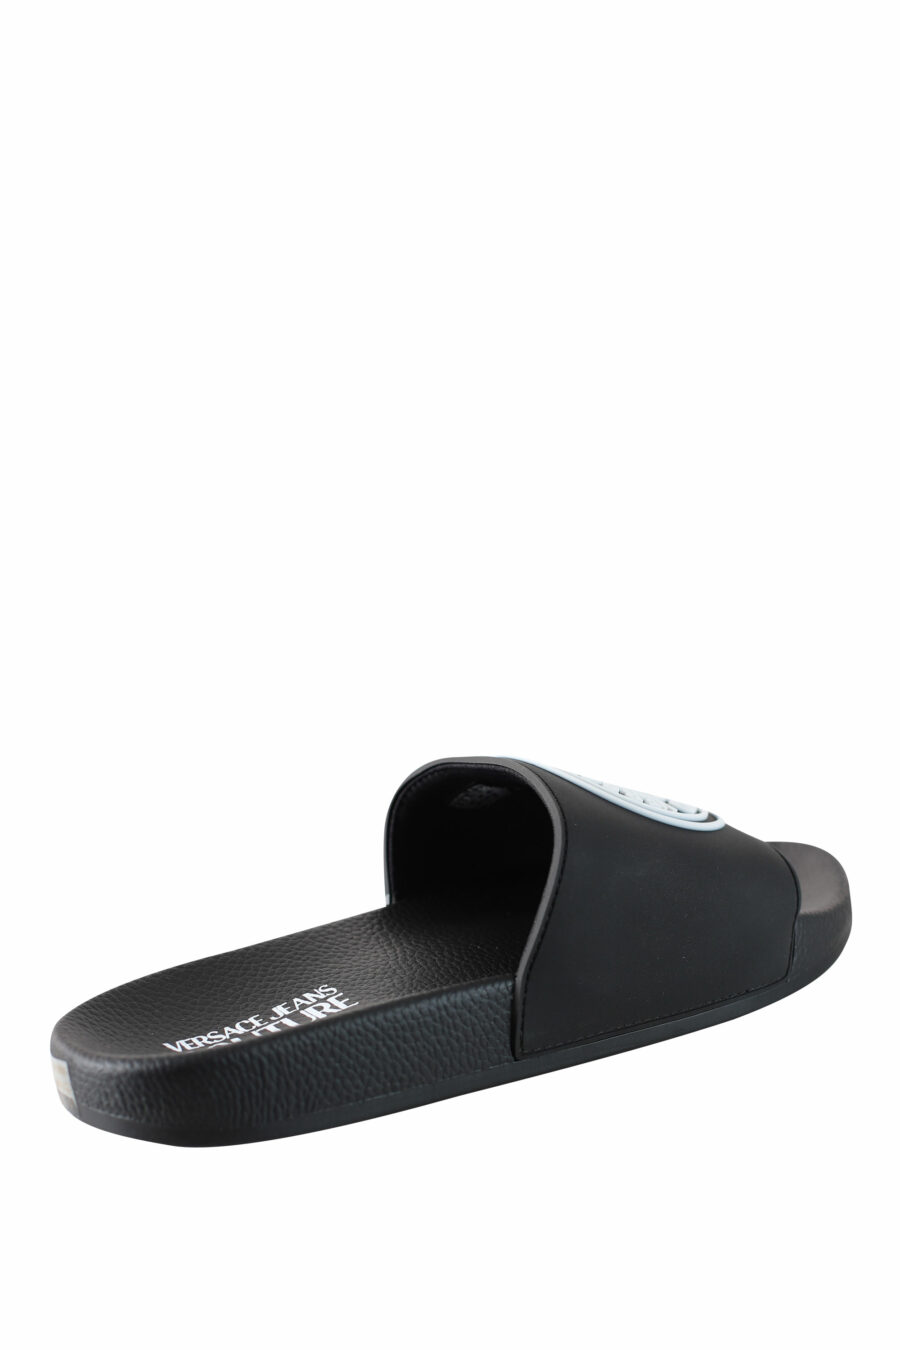 Schwarze Flip Flops mit schwarzem kreisförmigen Maxilogo - IMG 4427